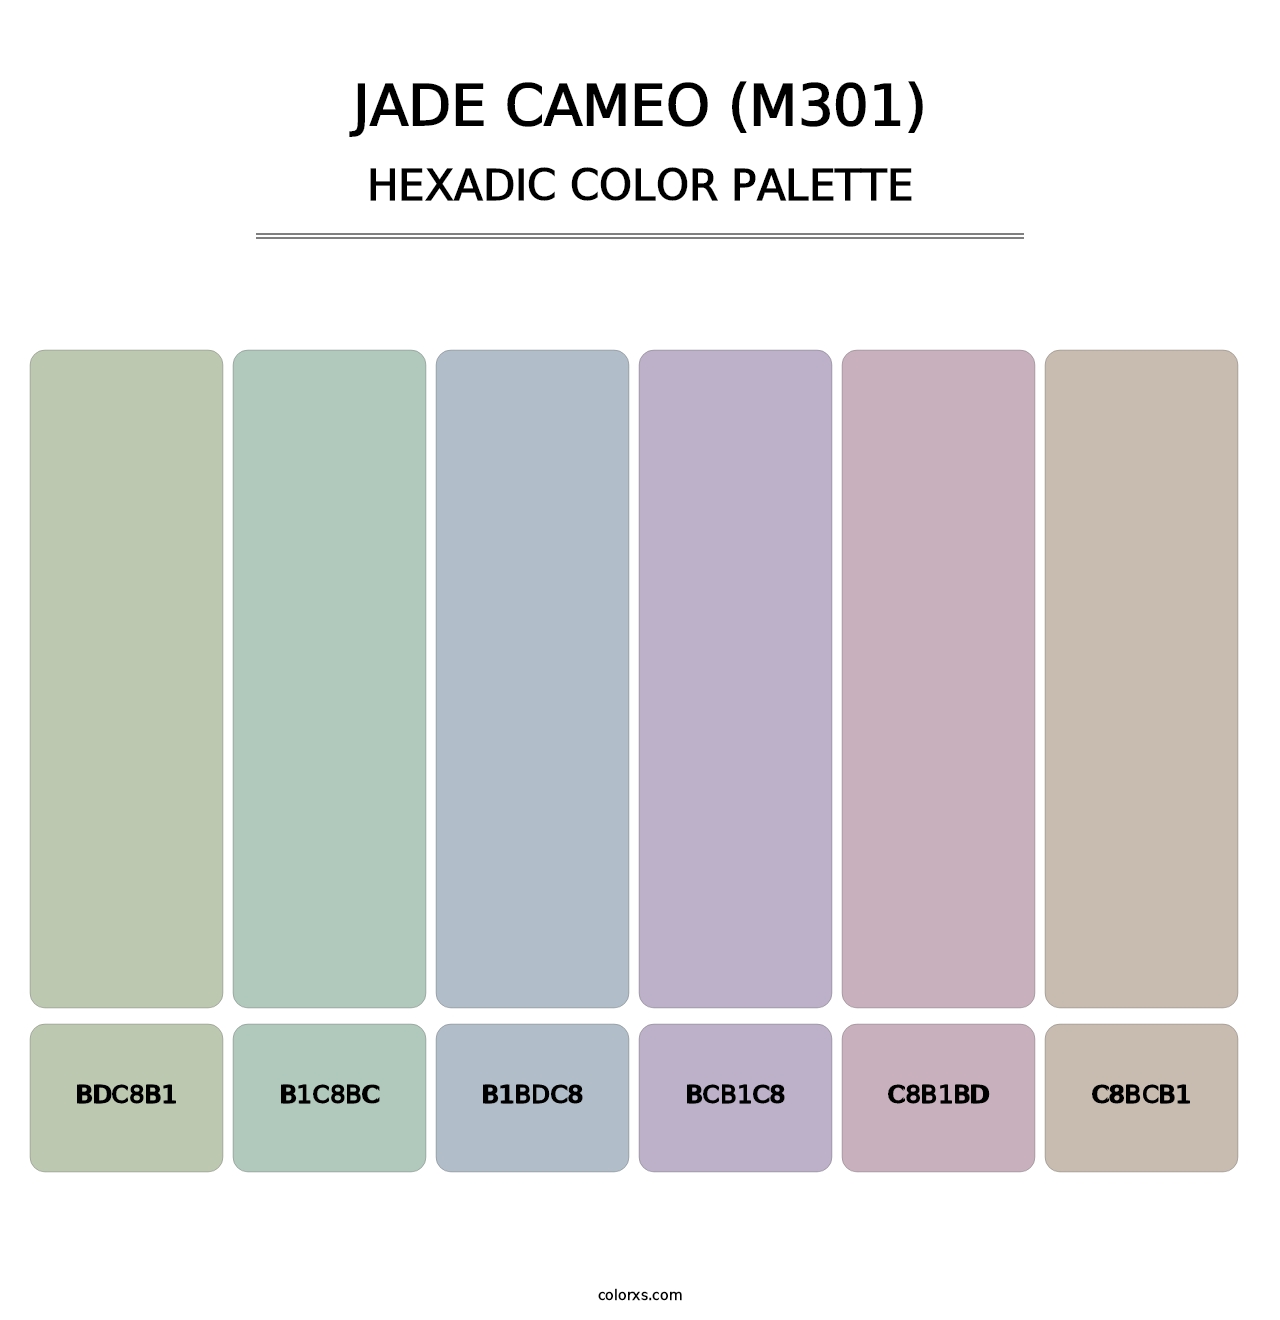 Jade Cameo (M301) - Hexadic Color Palette